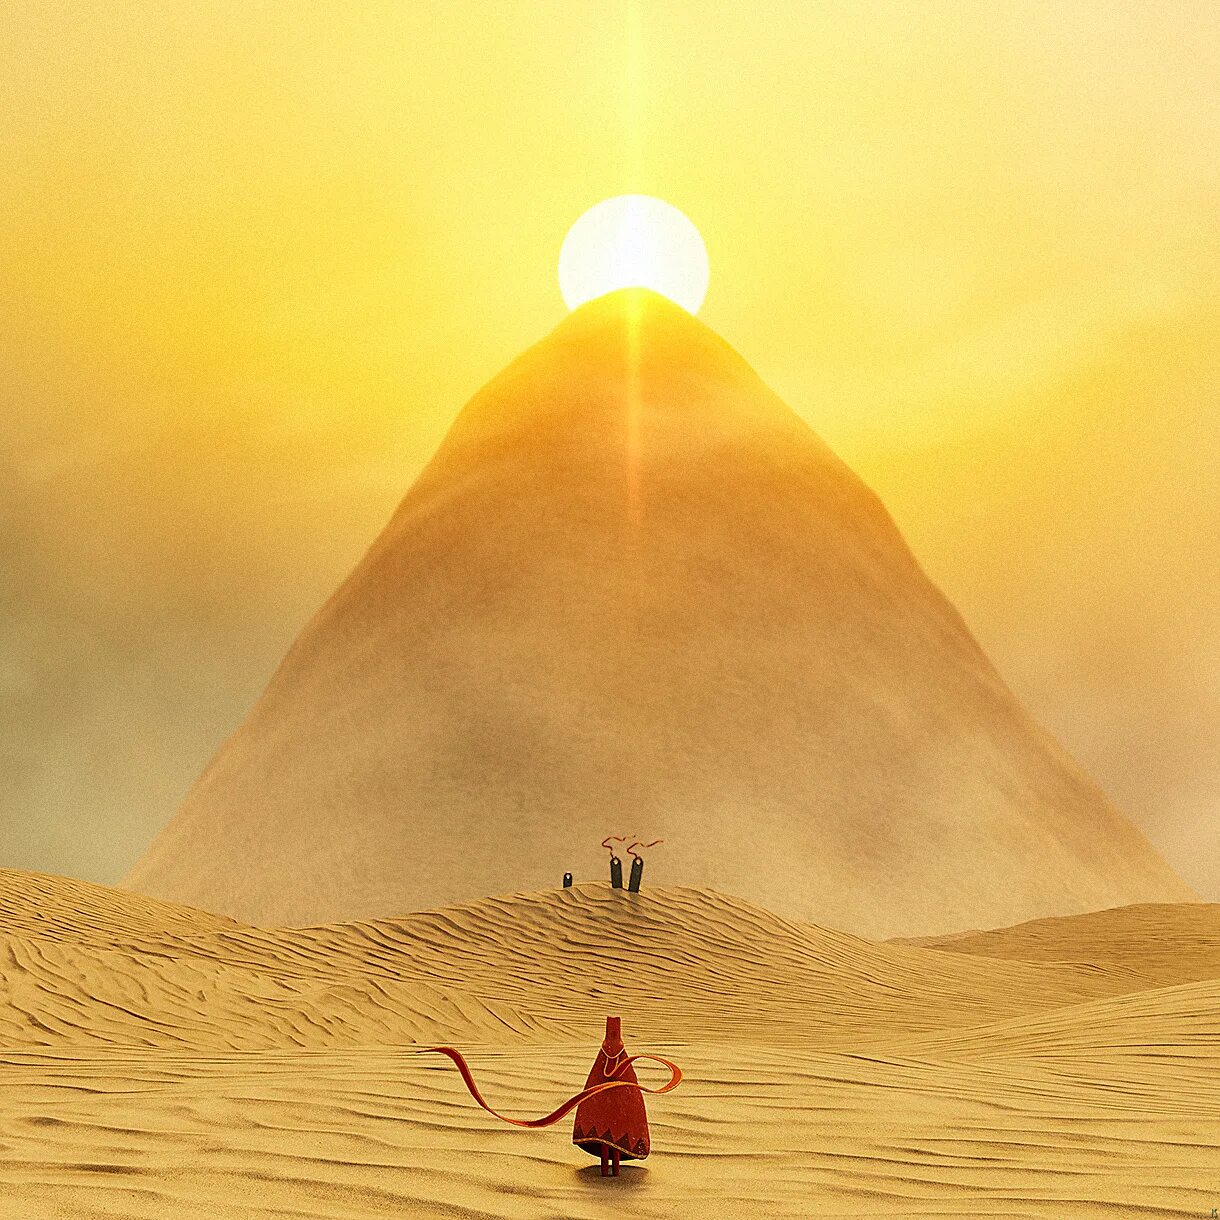 Джорни игра. Journey (игра, 2012). Джорни путешествие игра. Пустыня арт.